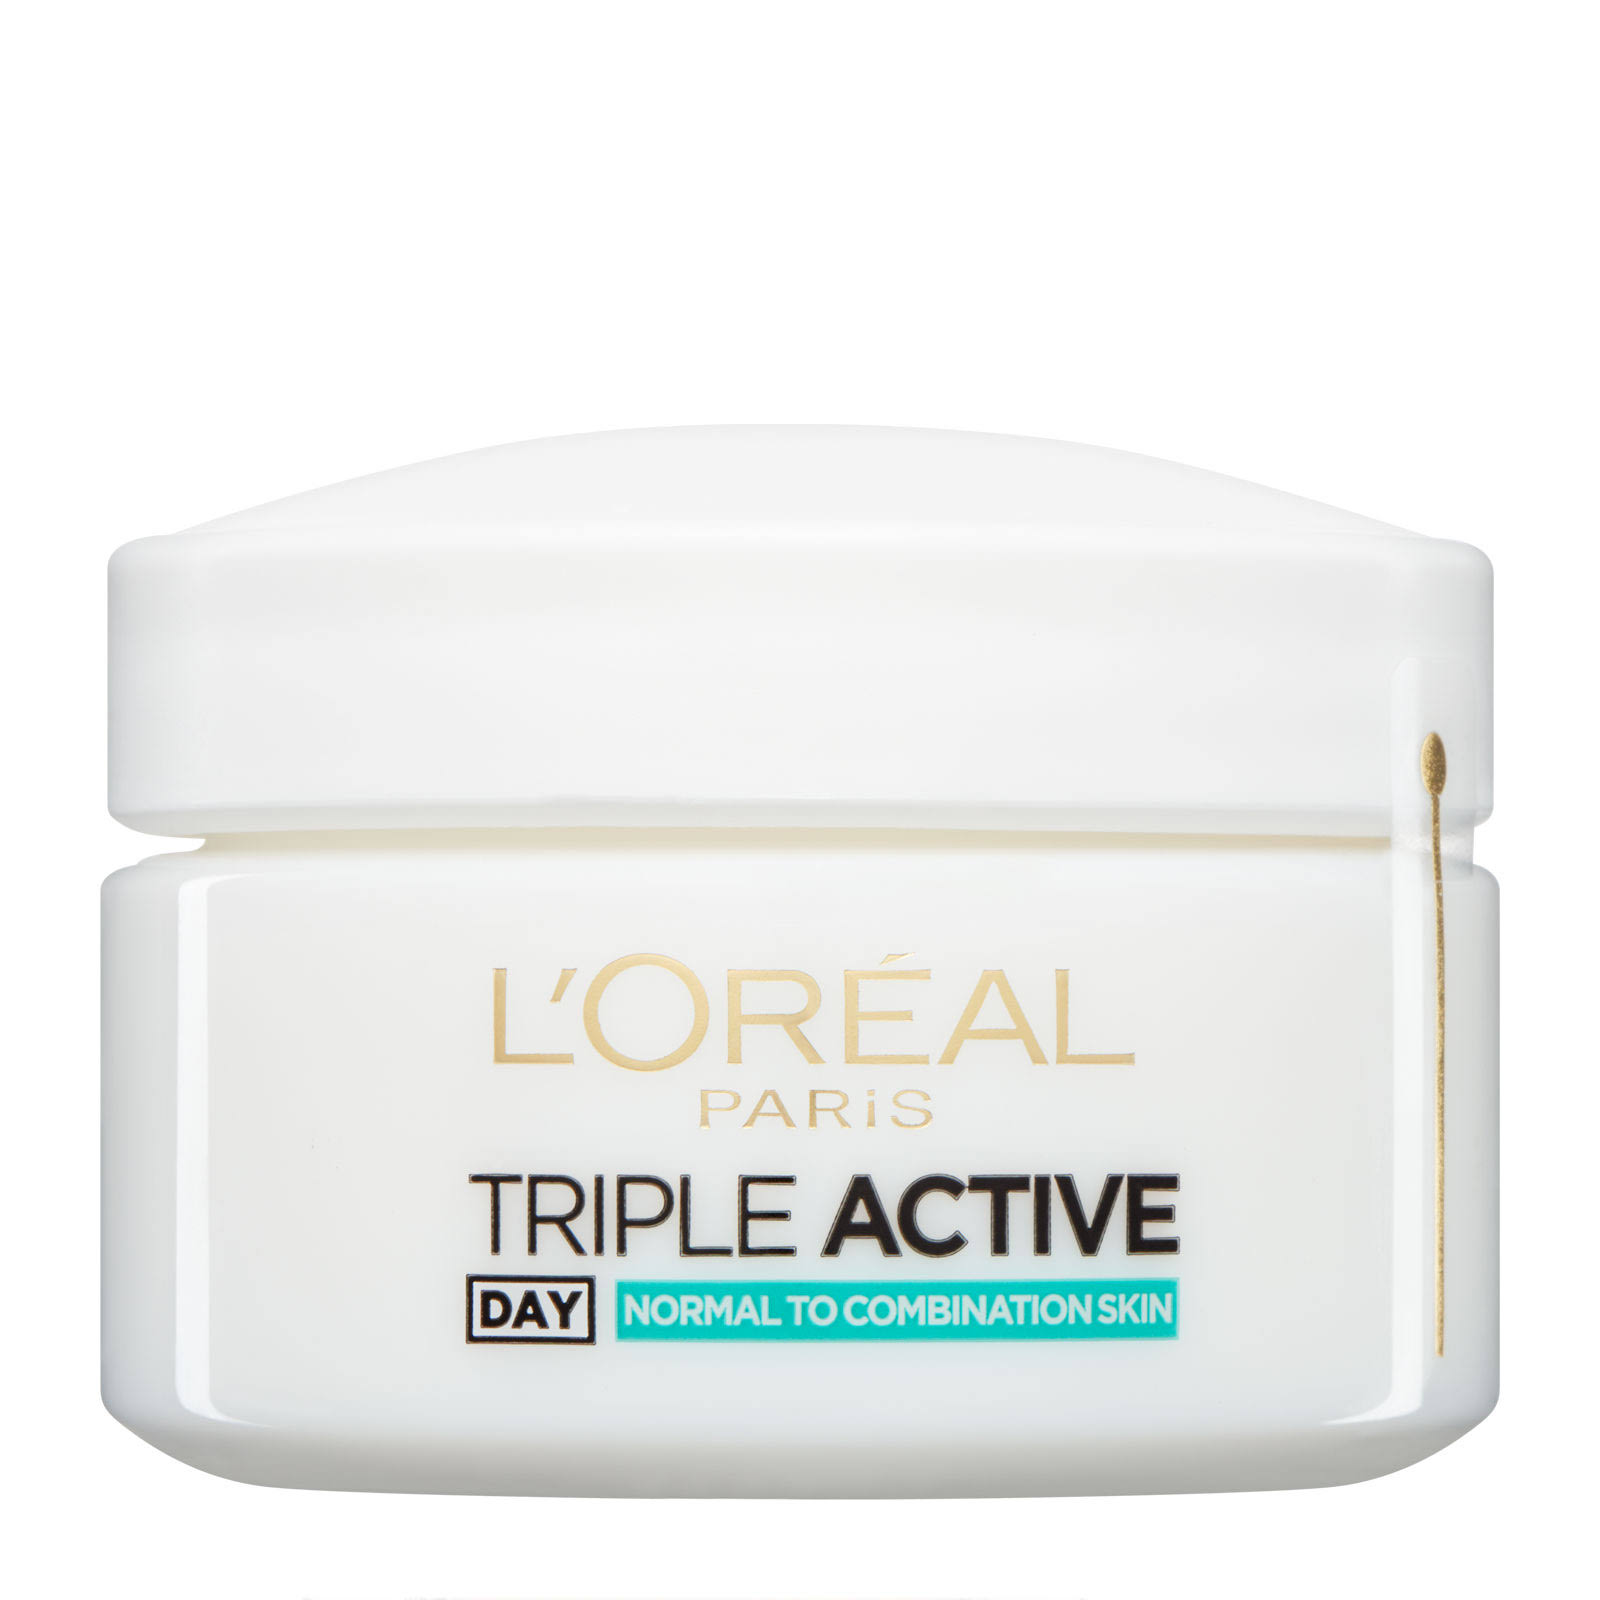 L'Oreal Paris Triple Active Day Moisturiser - Normal to Combination Skin, 50ml